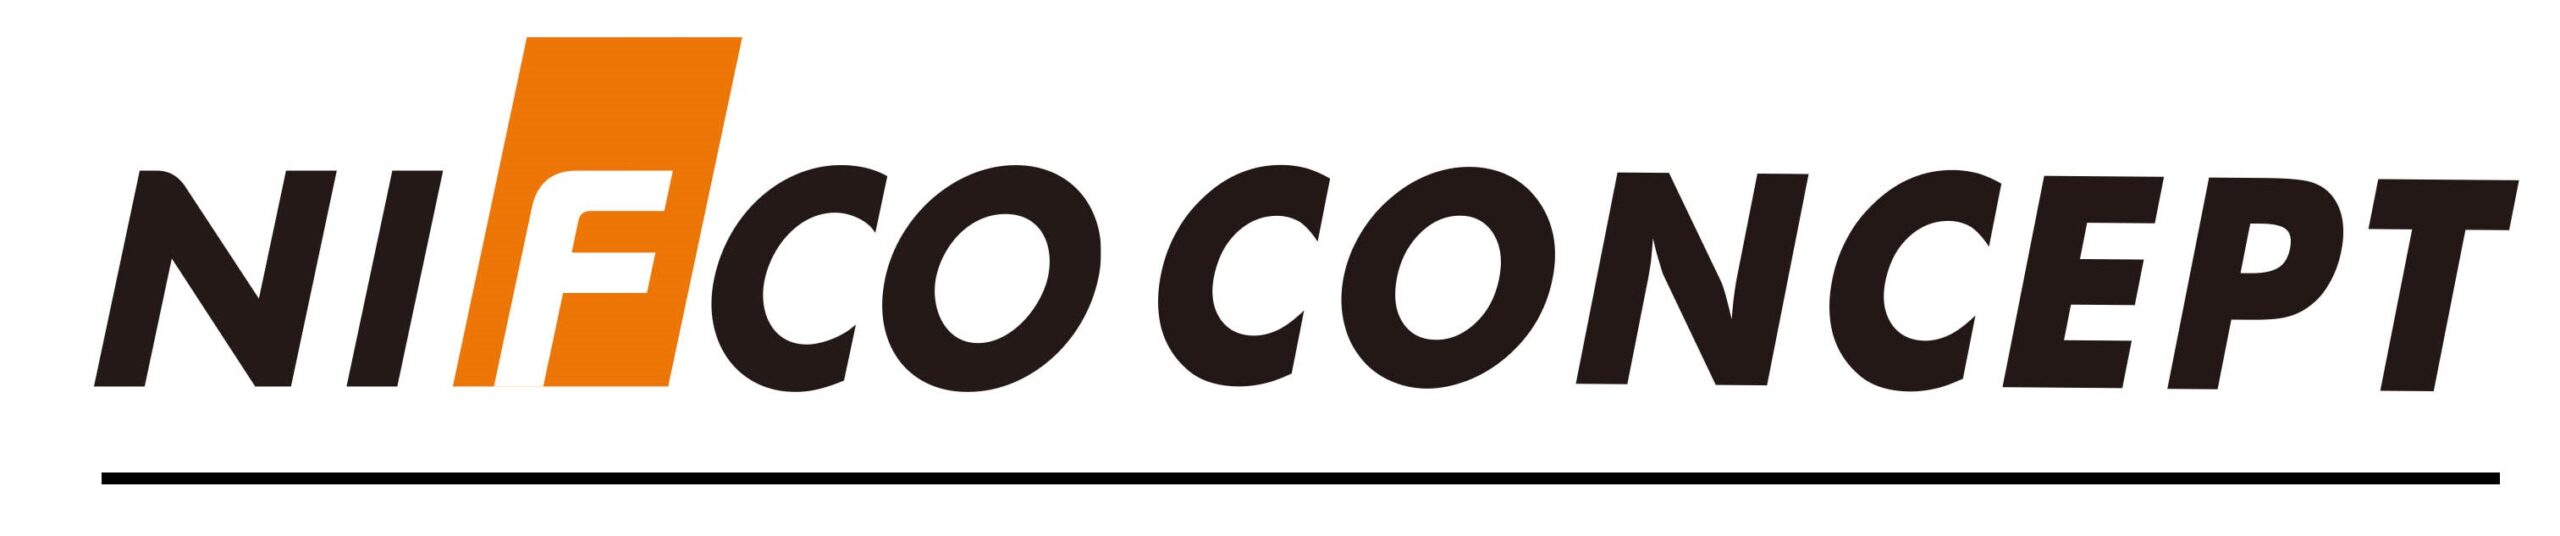 Nifco Concept header Image